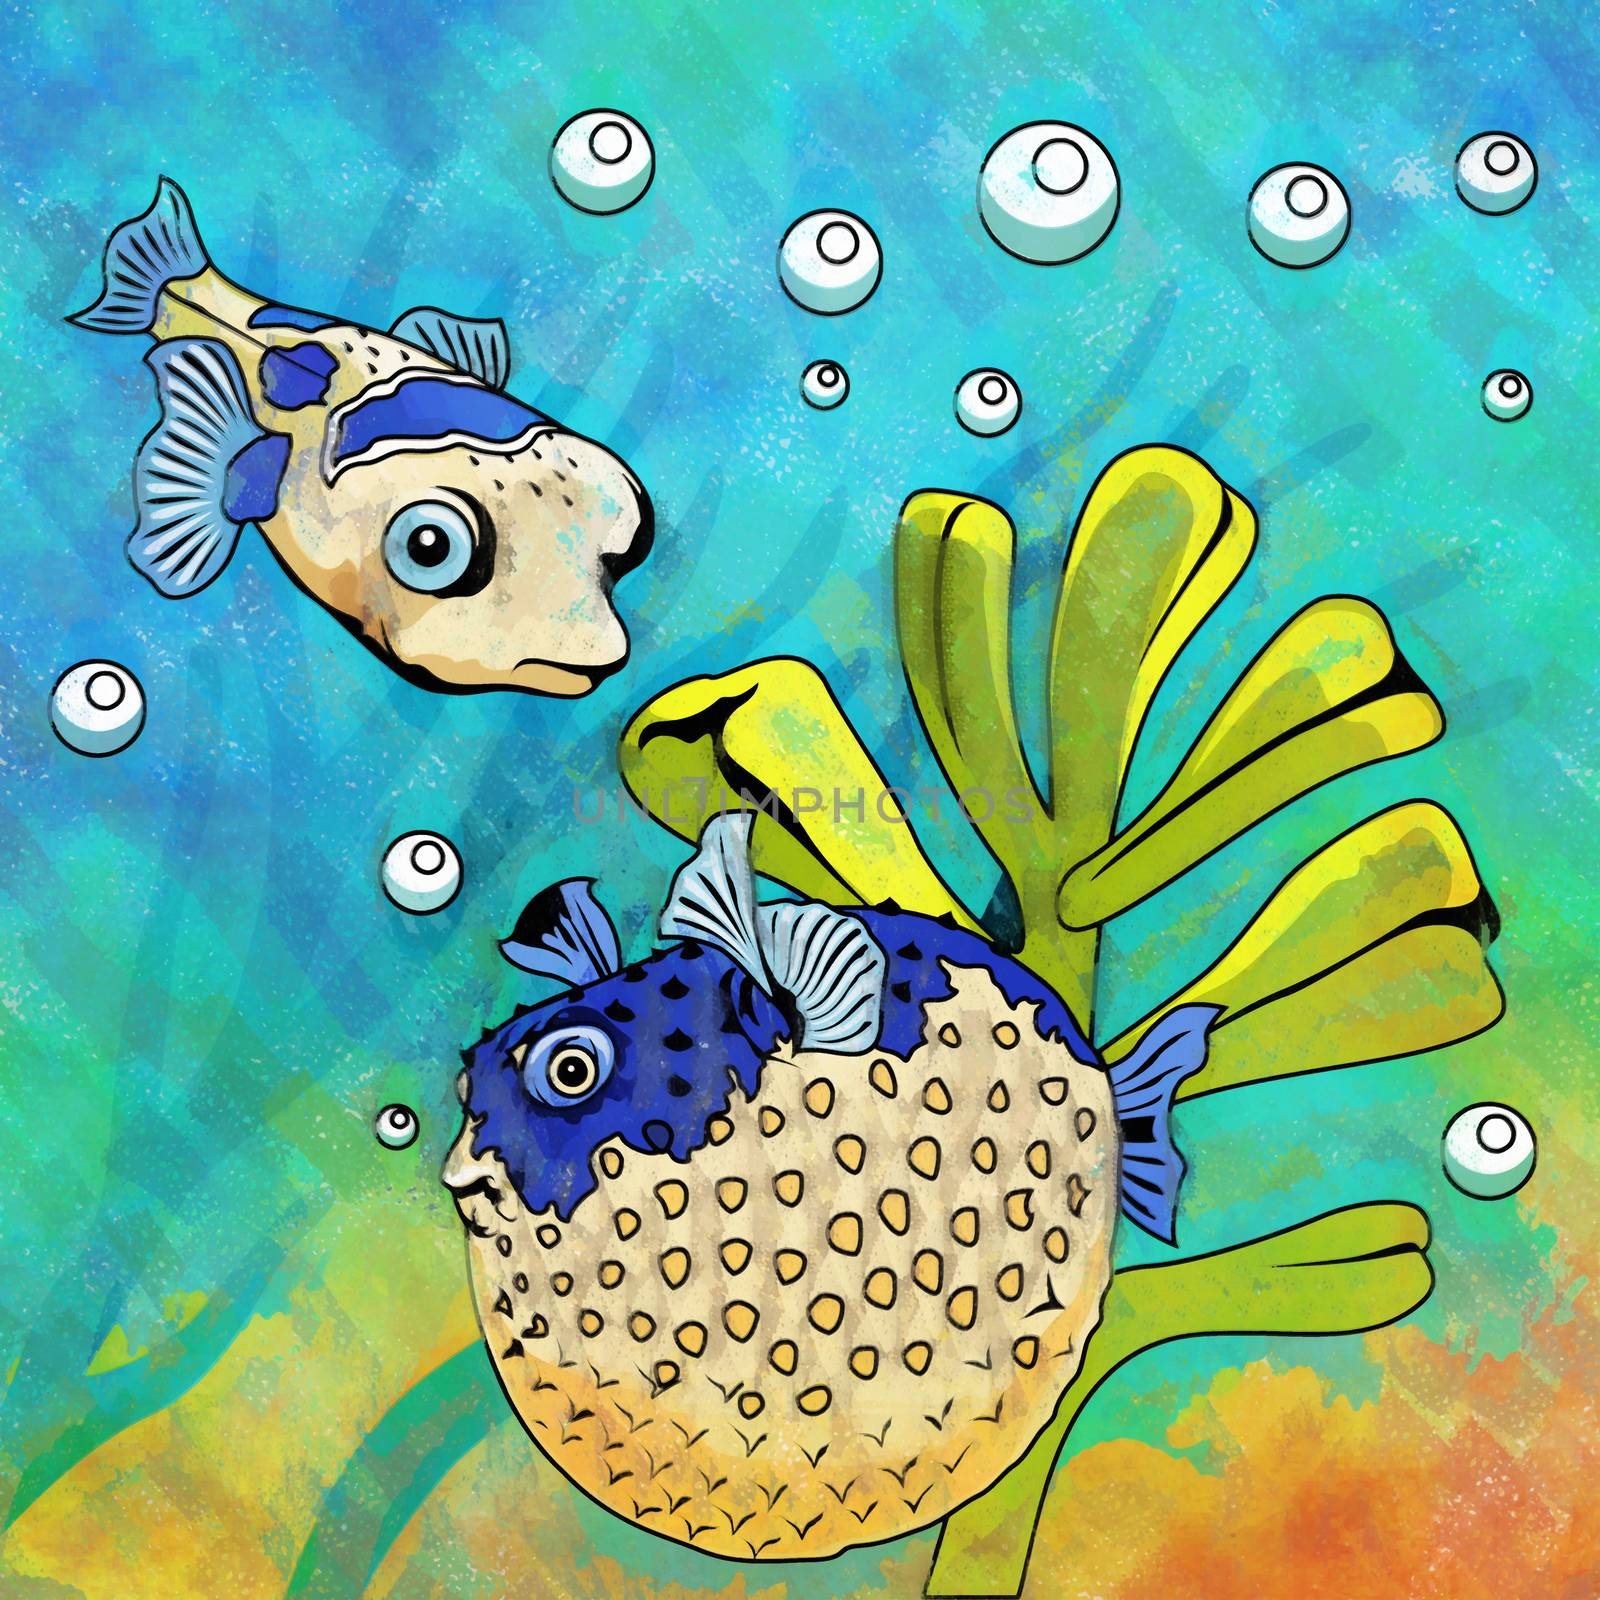 Colorful Aquarium Fishes by ConceptCafe